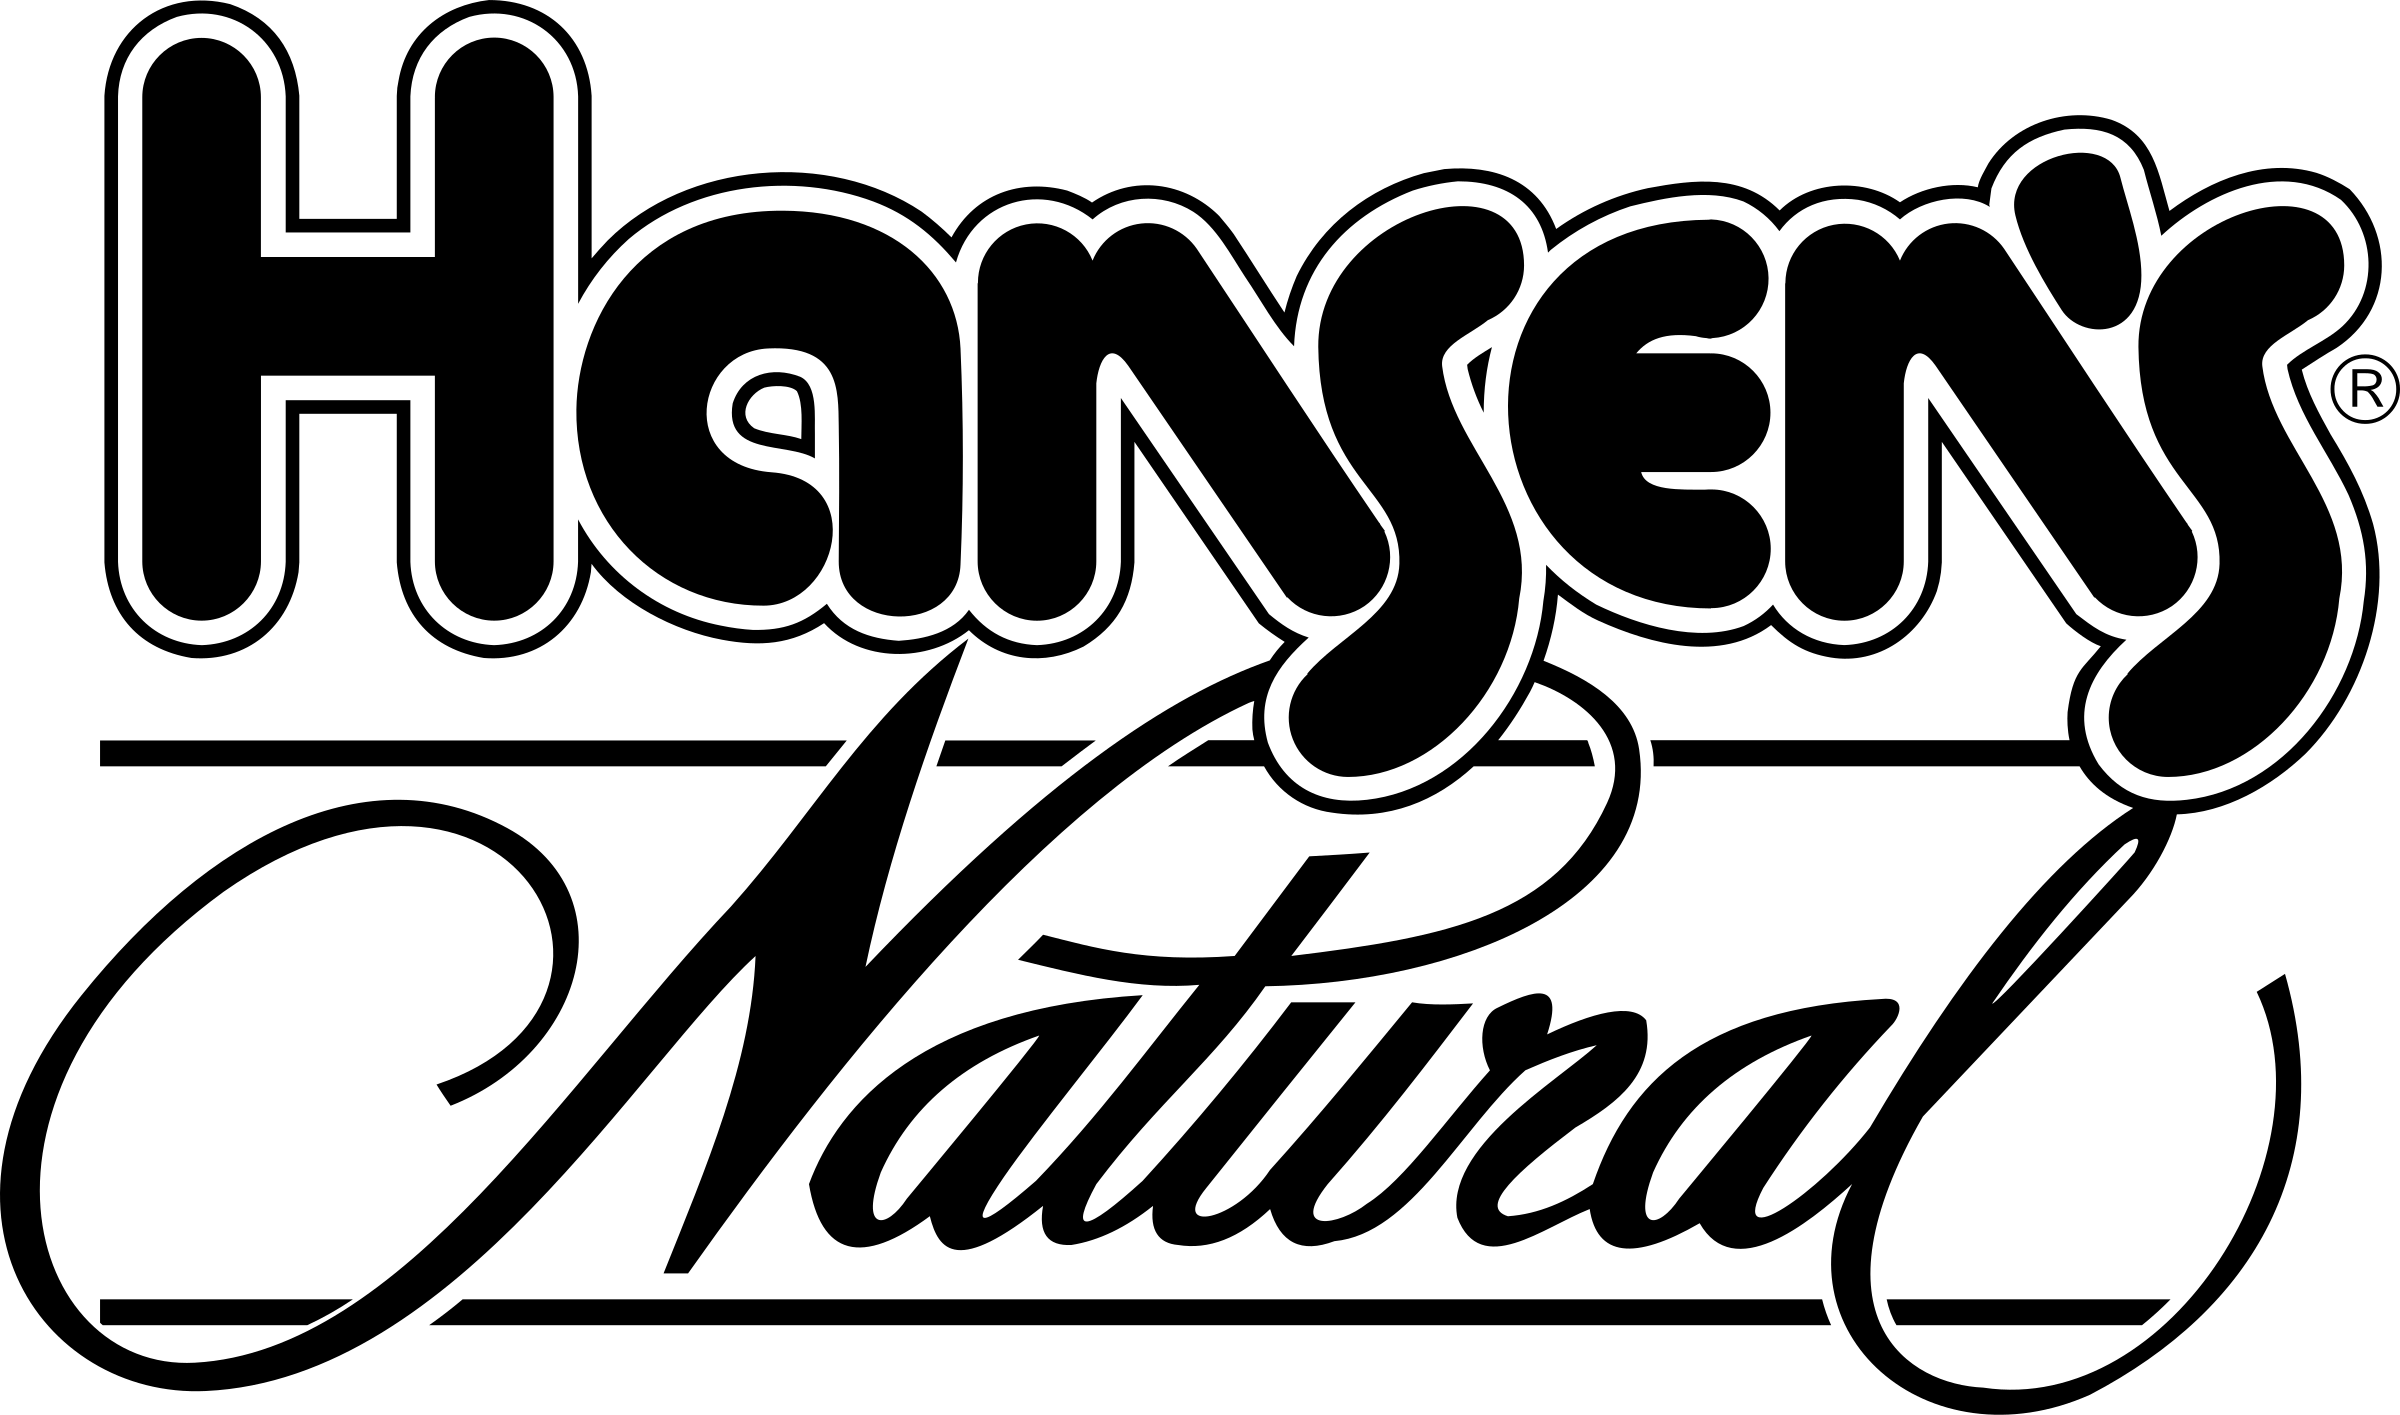 Hansen's Logo - Hansen's Logo PNG Transparent & SVG Vector